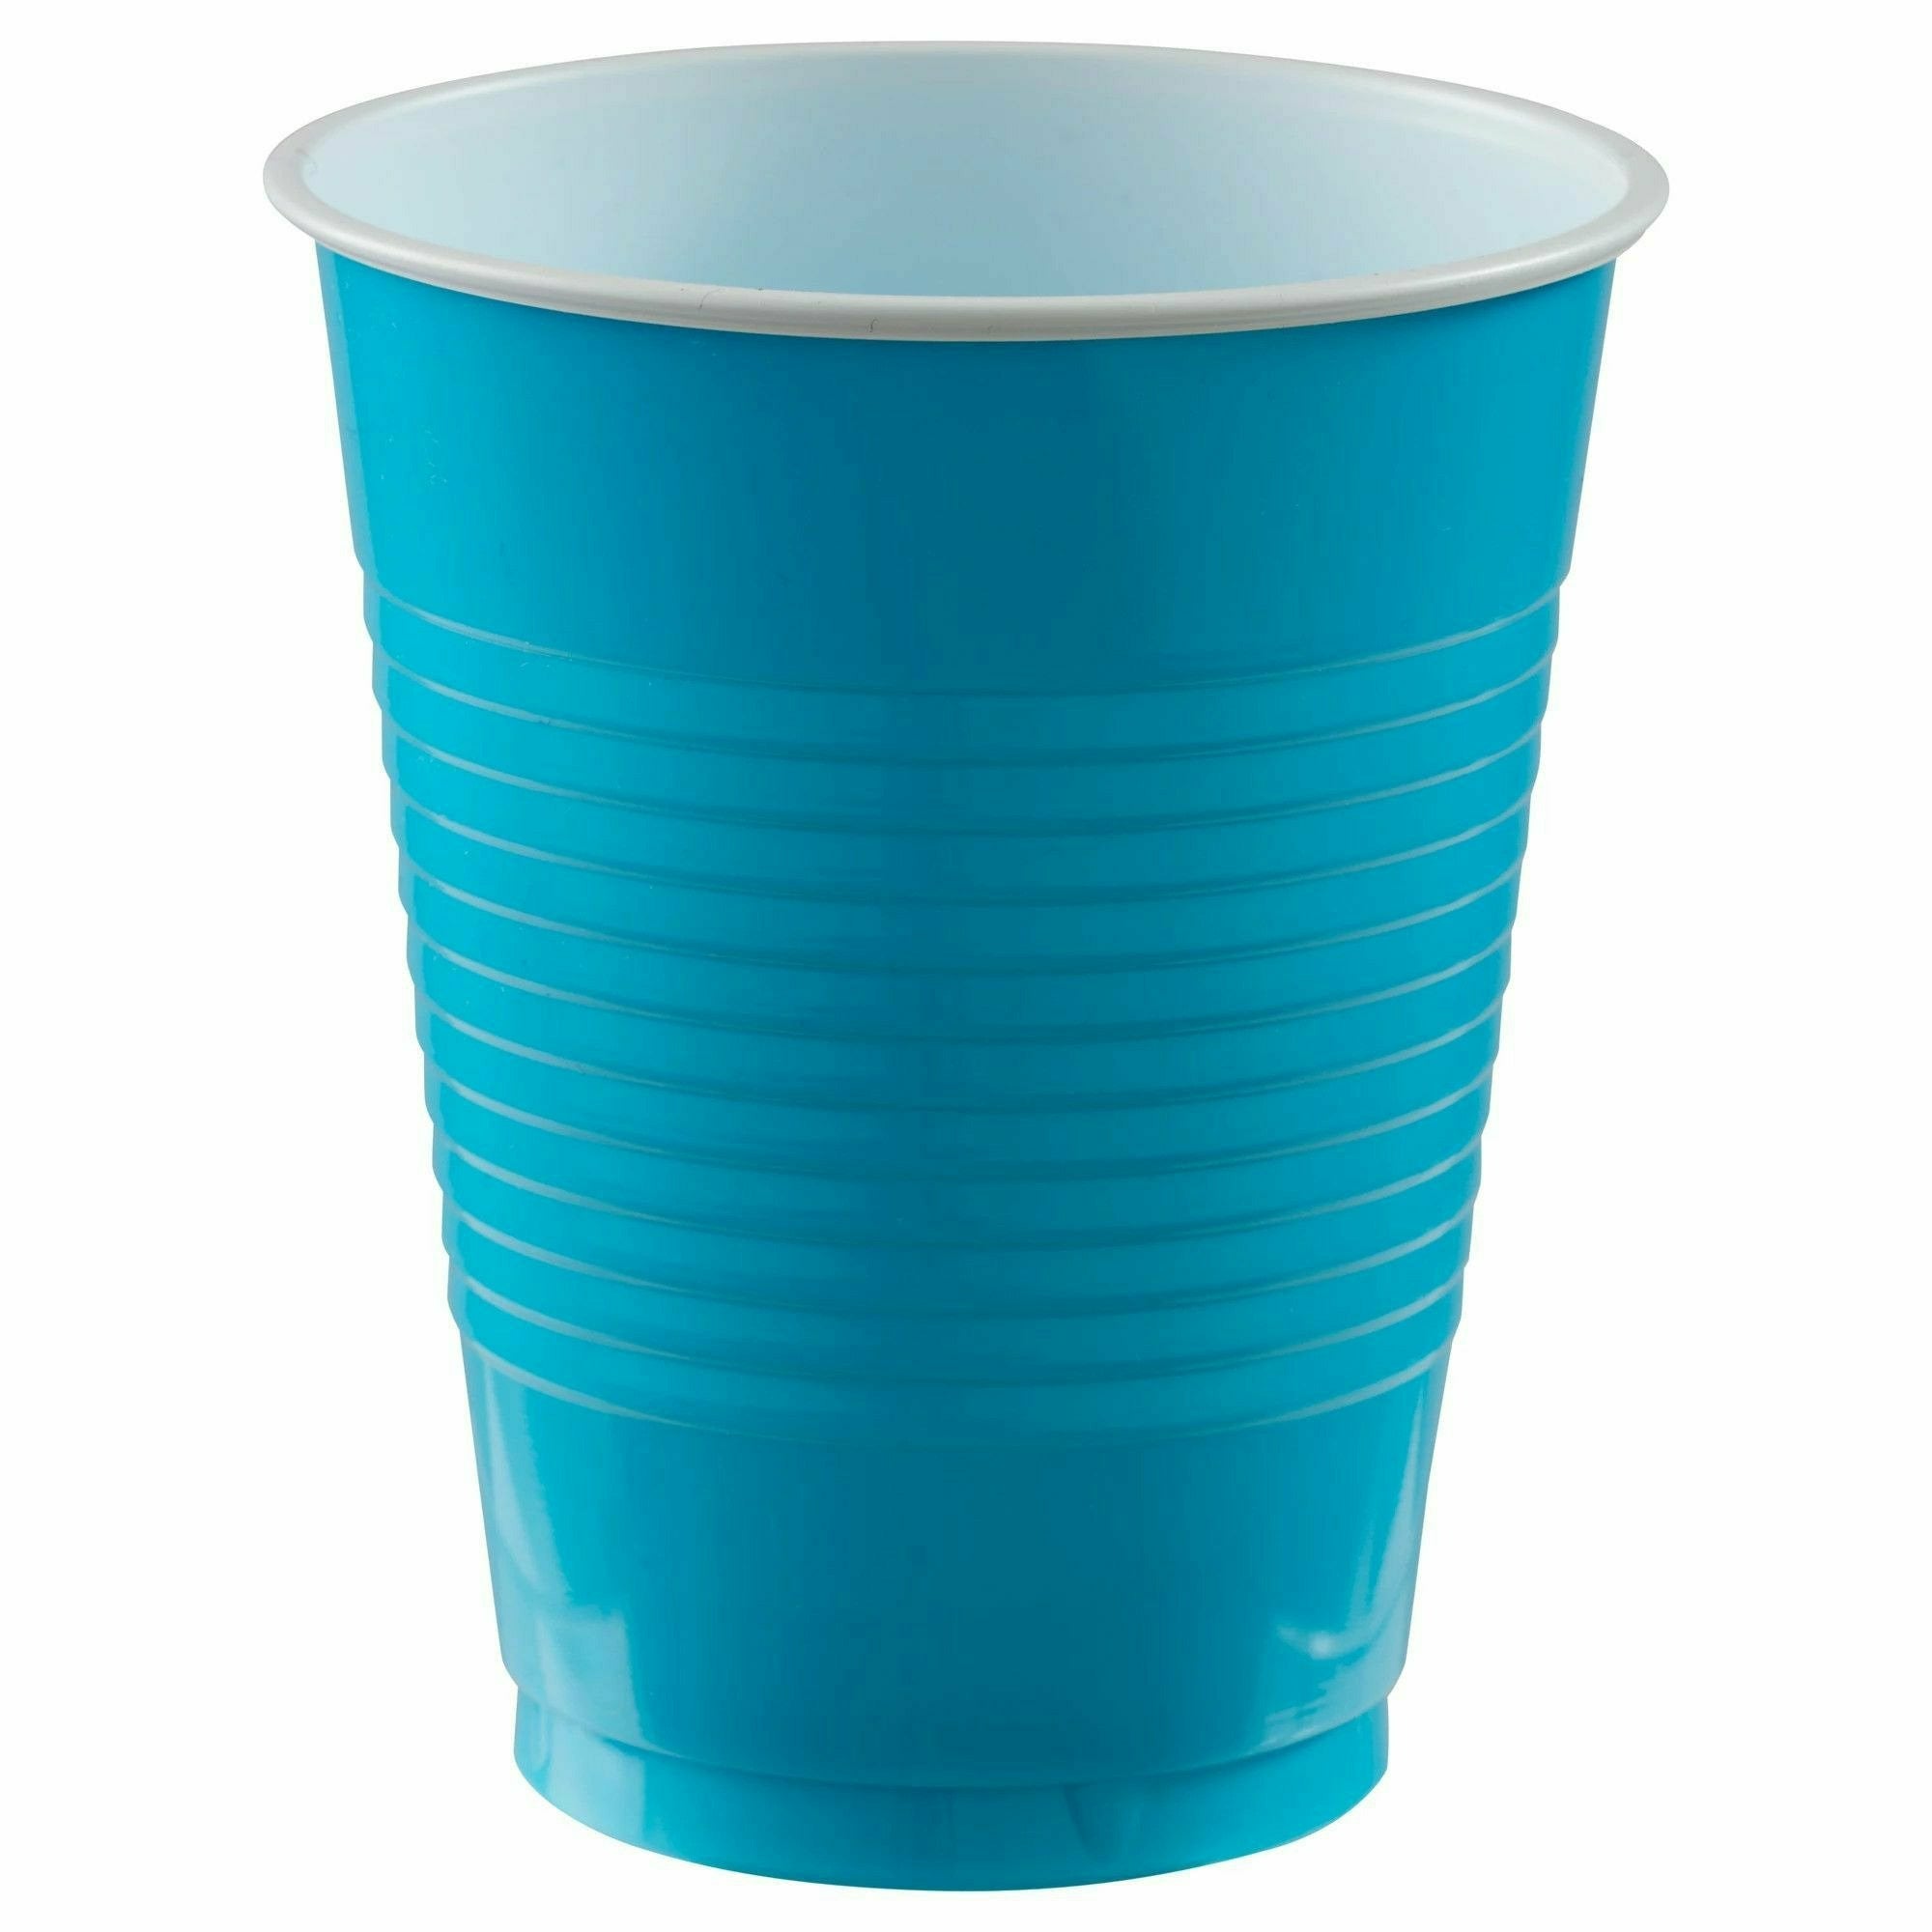 Amscan BASIC Caribbean - 18 oz. Plastic Cups, 20 Ct.